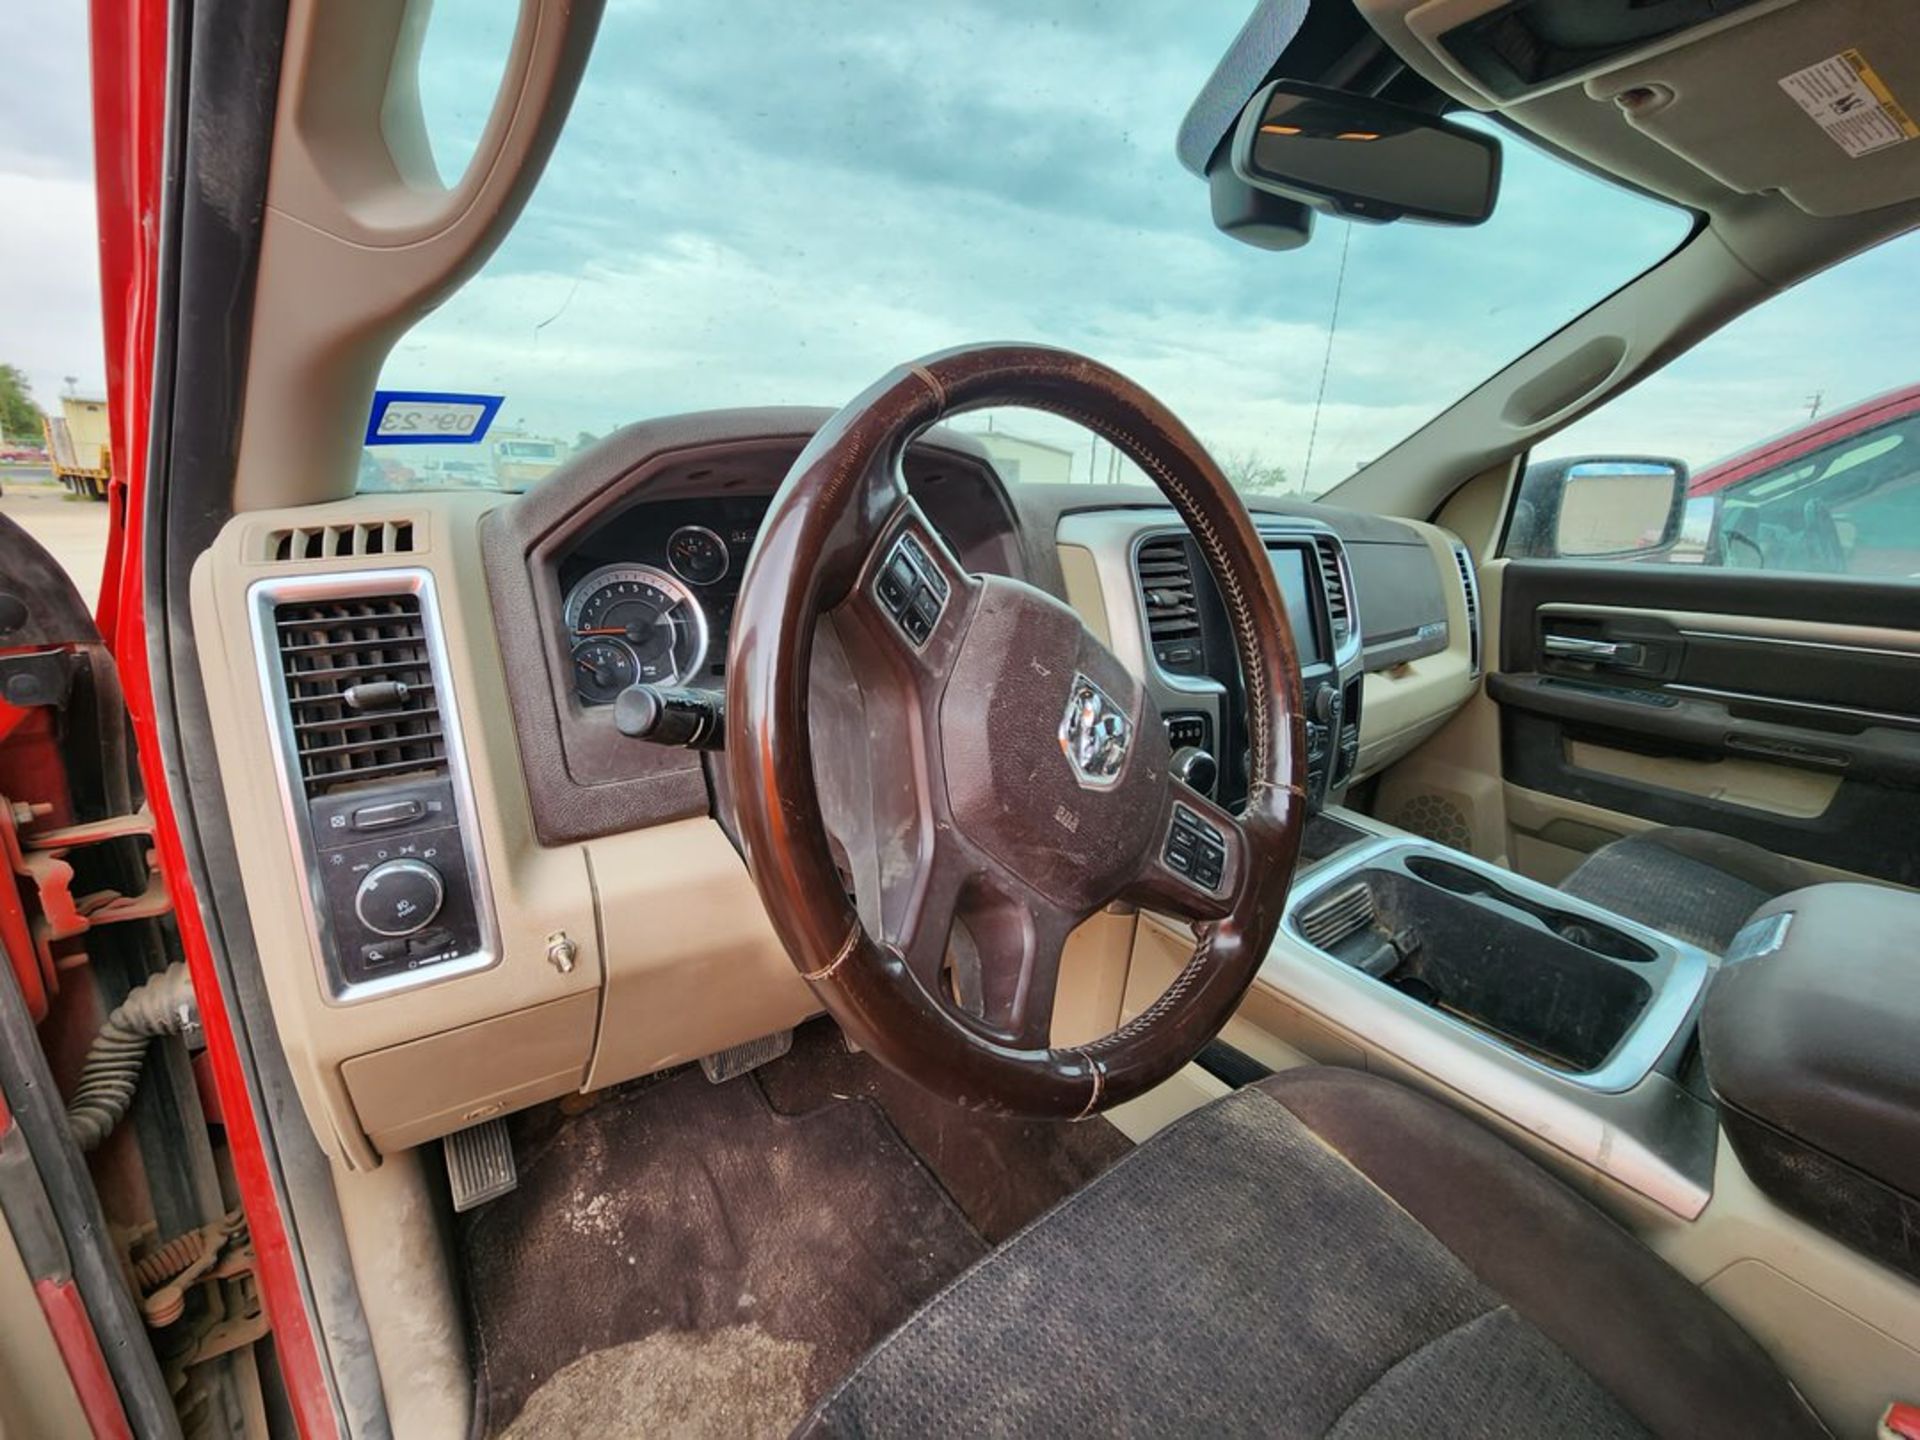 2017 Dodge Ram 1500 Hemi Truck (Gasoline) Mileage: 89,578 ; Vin: 1C6RR7T2HS719480; TX Plate: JXZ- - Image 13 of 19